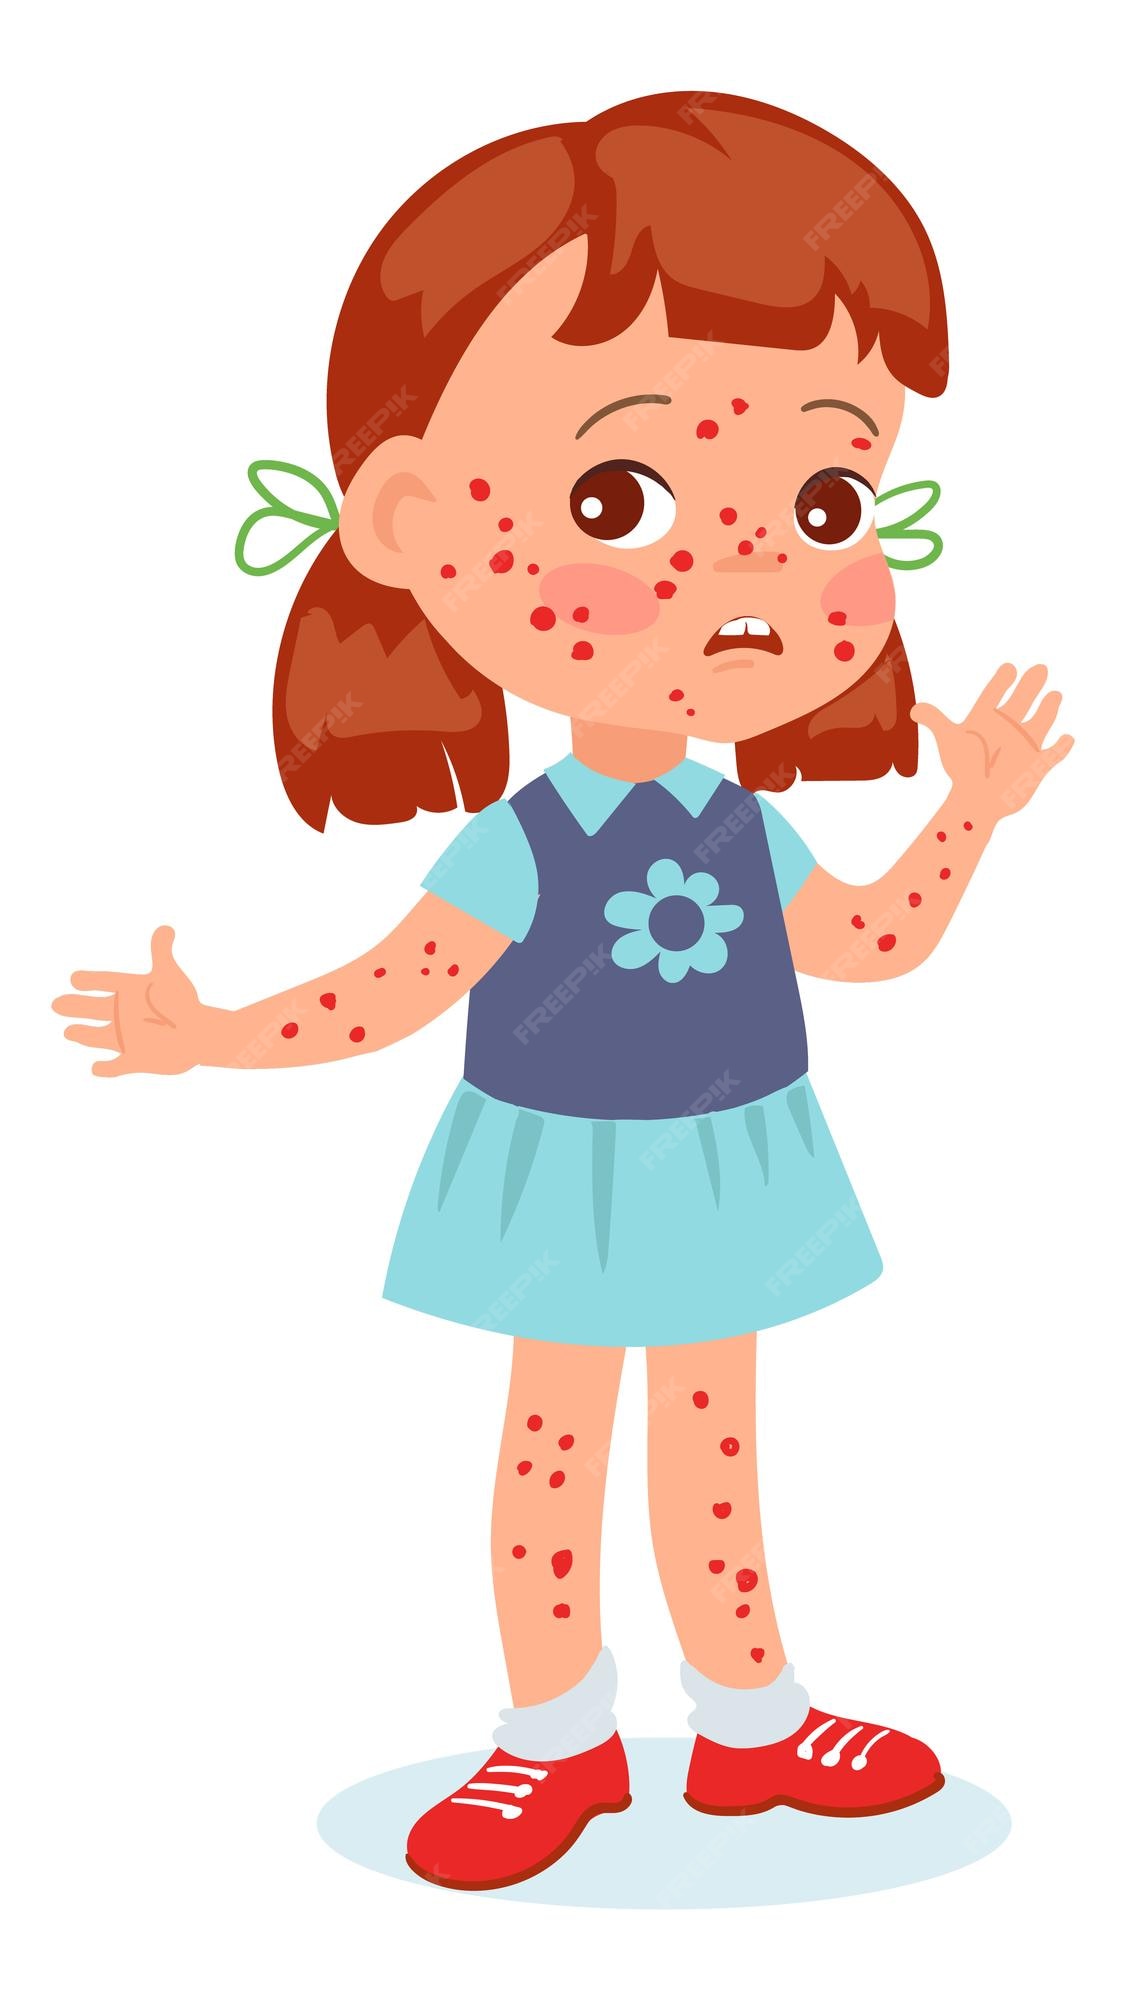 Premium Vector | Child with chicken pox cartoon kid with red rash